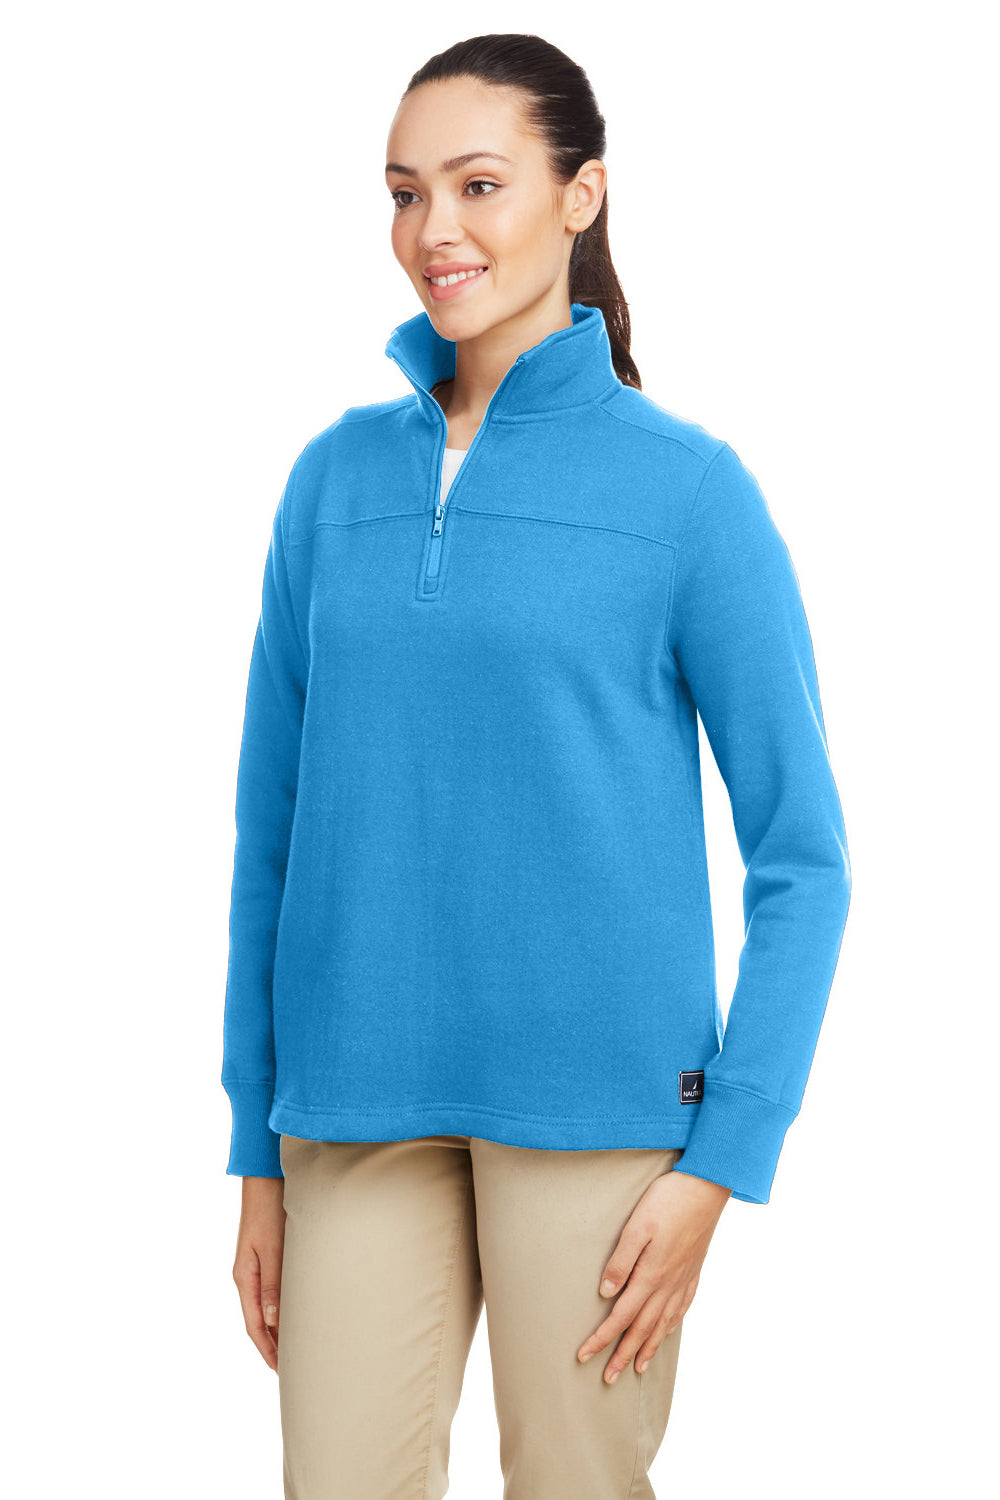 Nautica N17397 Womens Anchor Fleece 1/4 Zip Sweatshirt Azure Blue 3Q